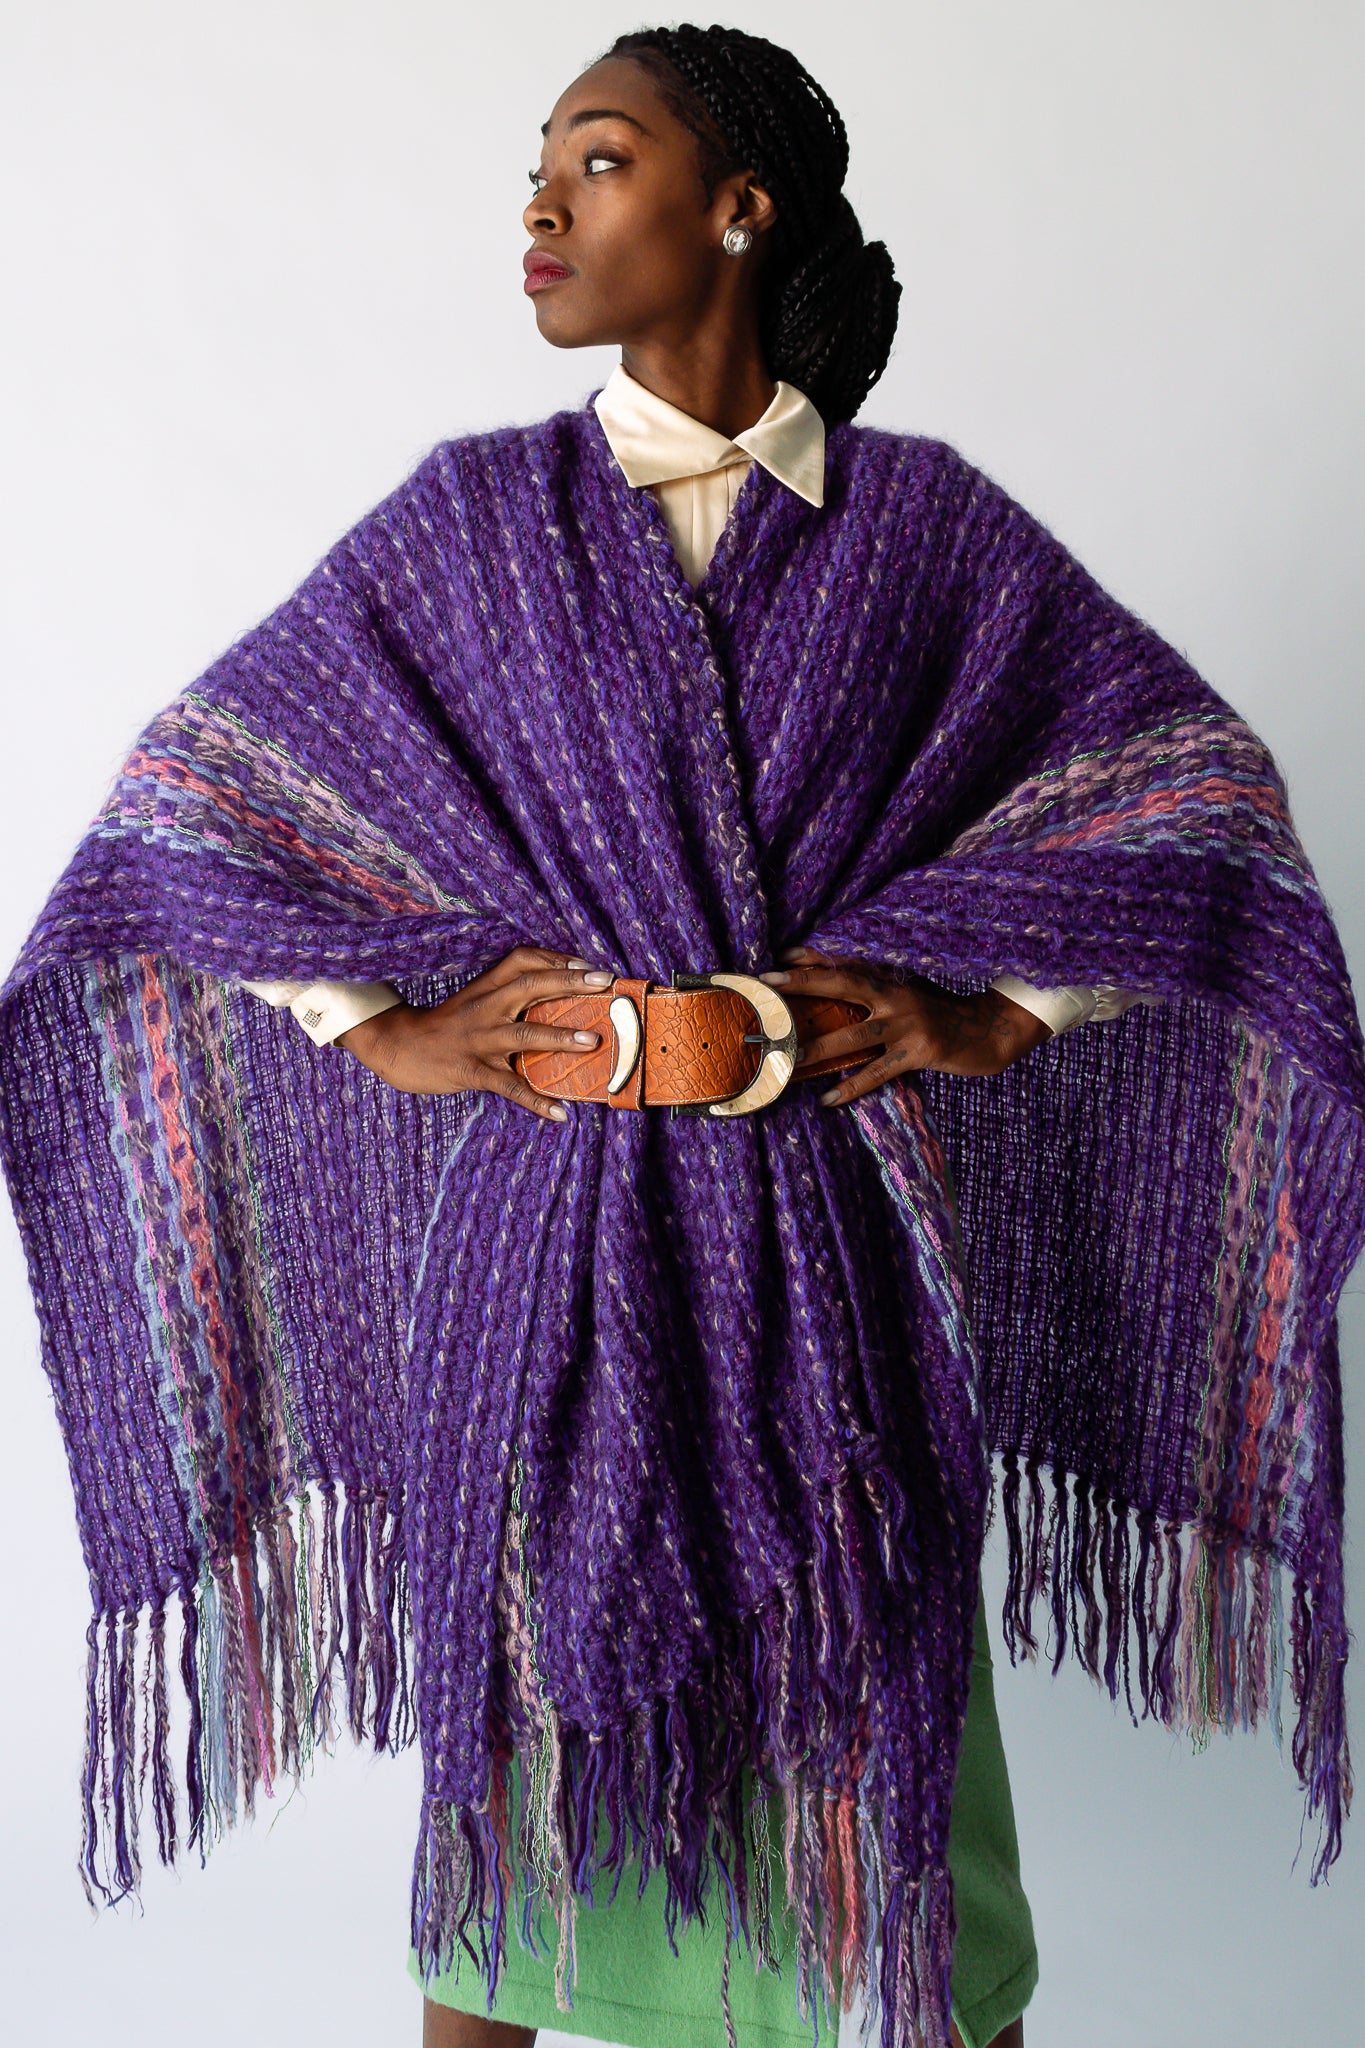 Girl wearing purple yarn shawl mint skirt and belt at Recess Los Angeles